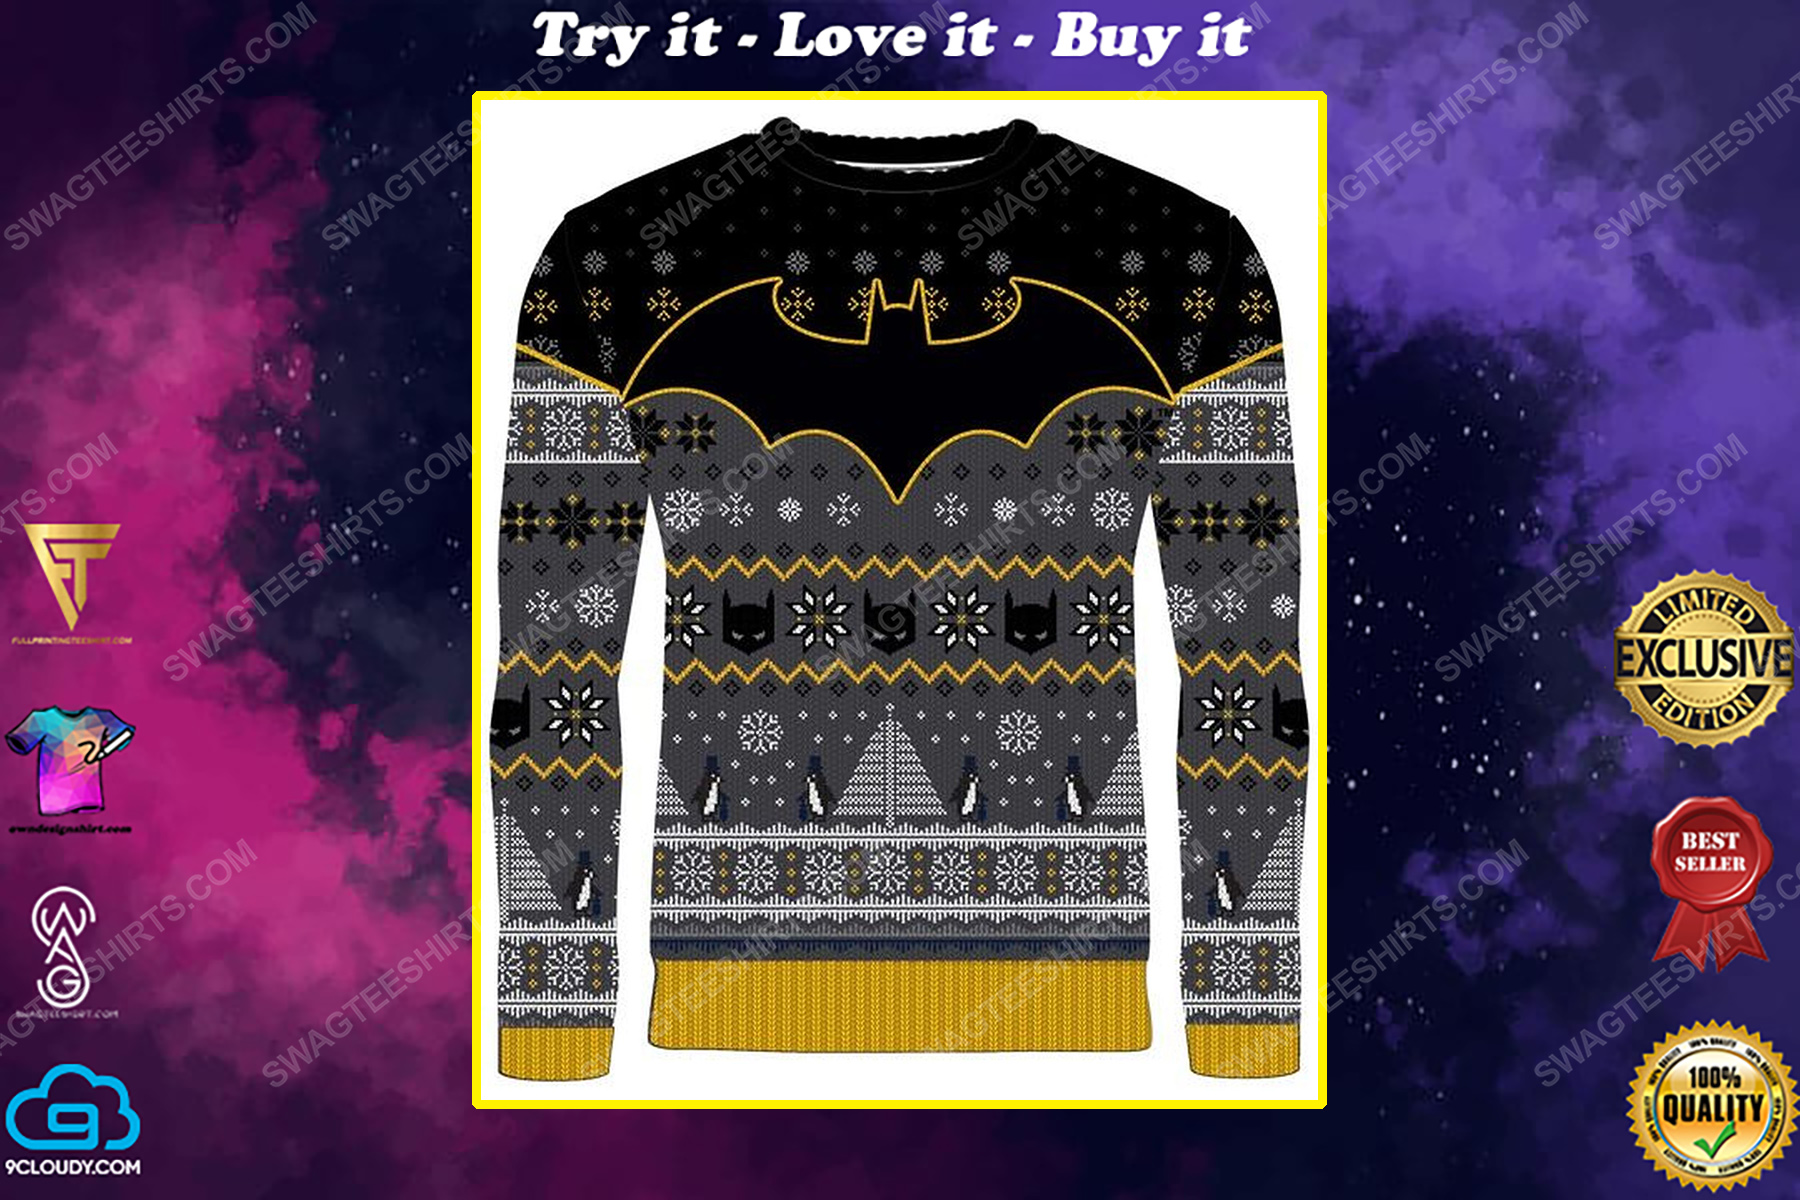 Goodwill in gotham batman full print ugly christmas sweater